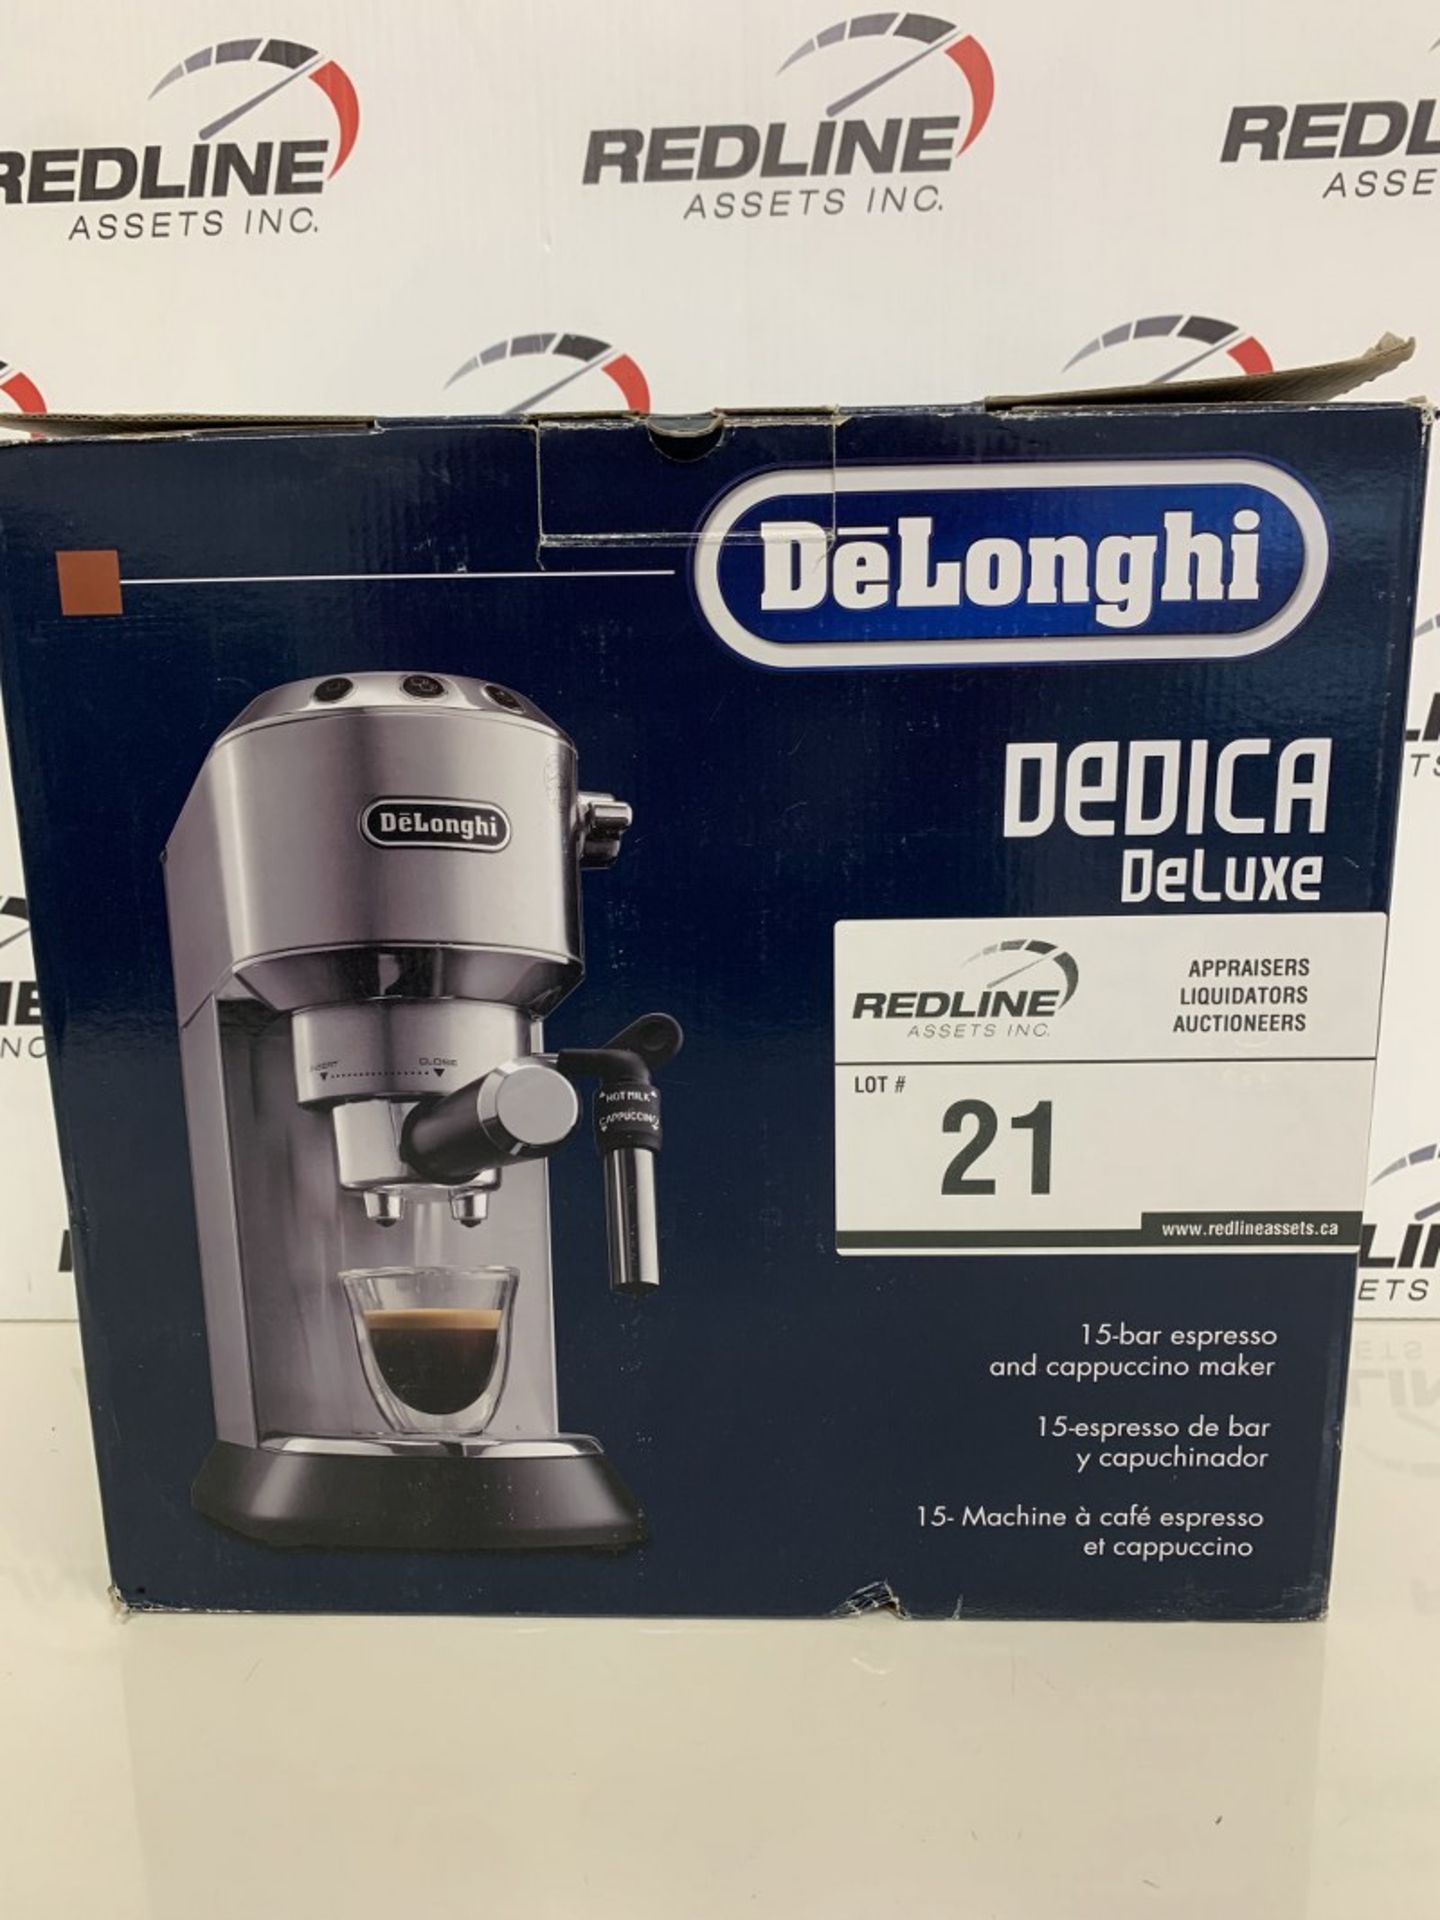 Delonghi - Cedica Deluxe - 15 Bar Espresso And Cappuccino Maker